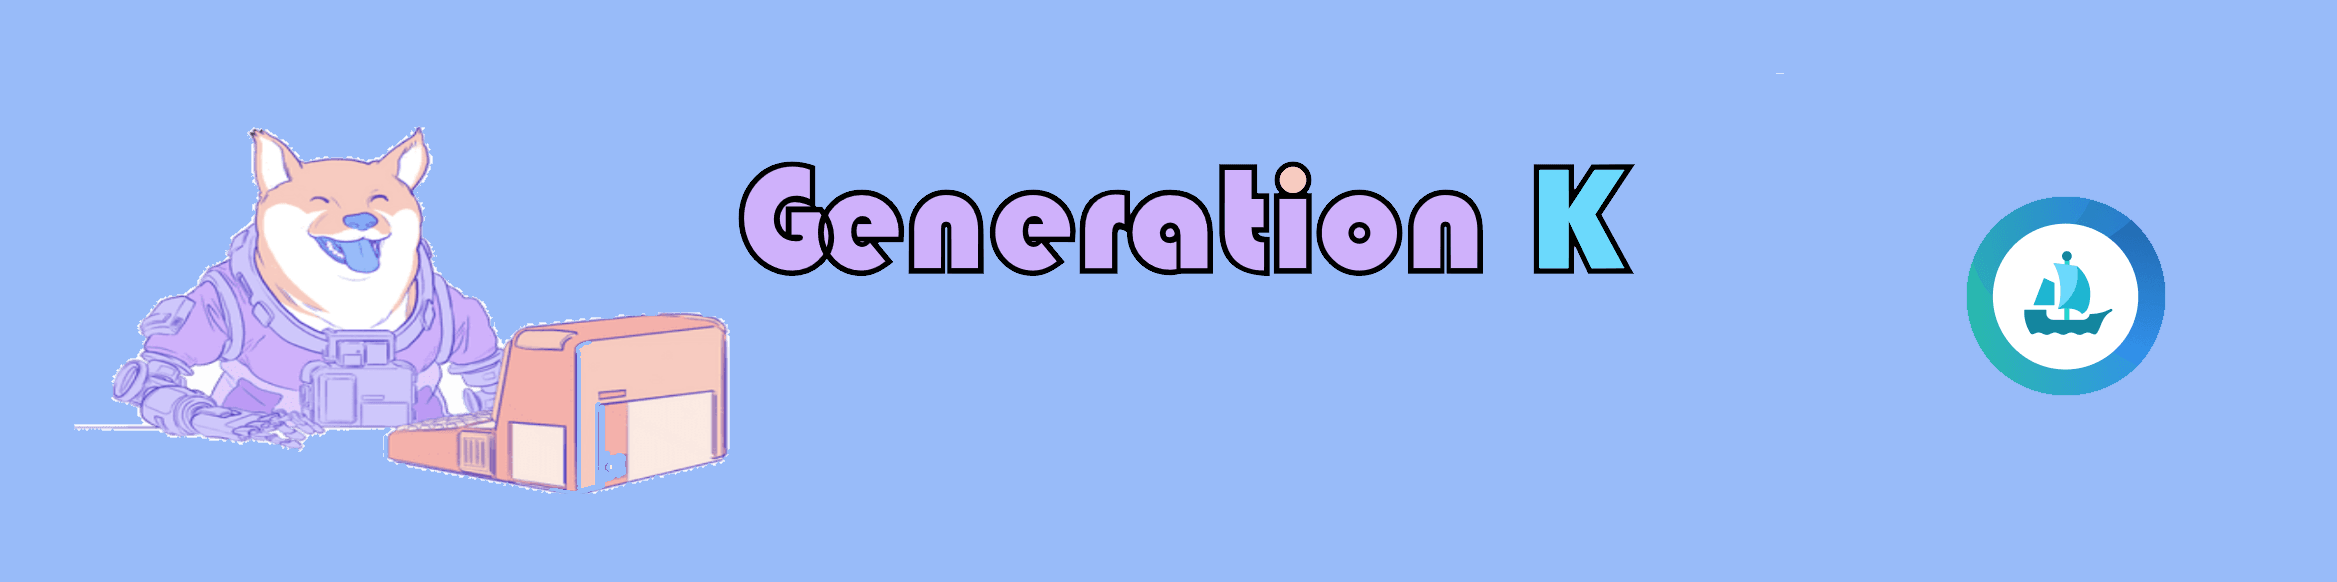 Generation_K 橫幅